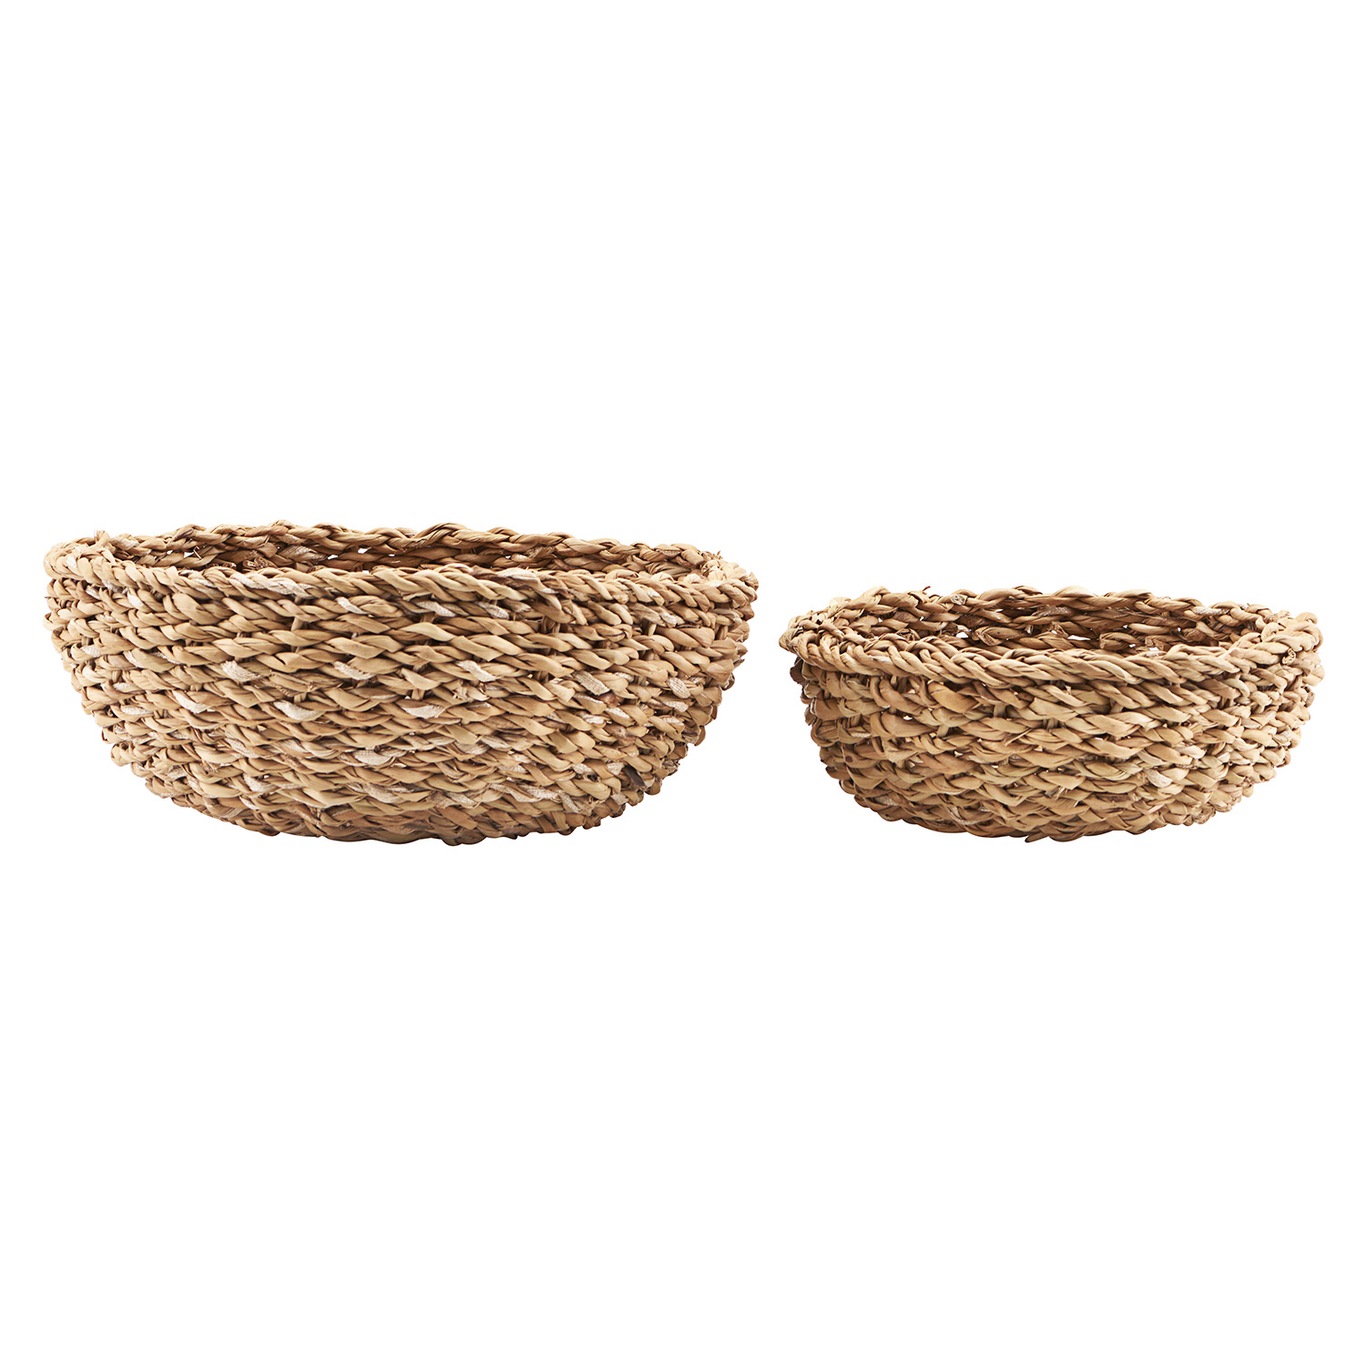 Bread Basket 2 Pieces, Natural